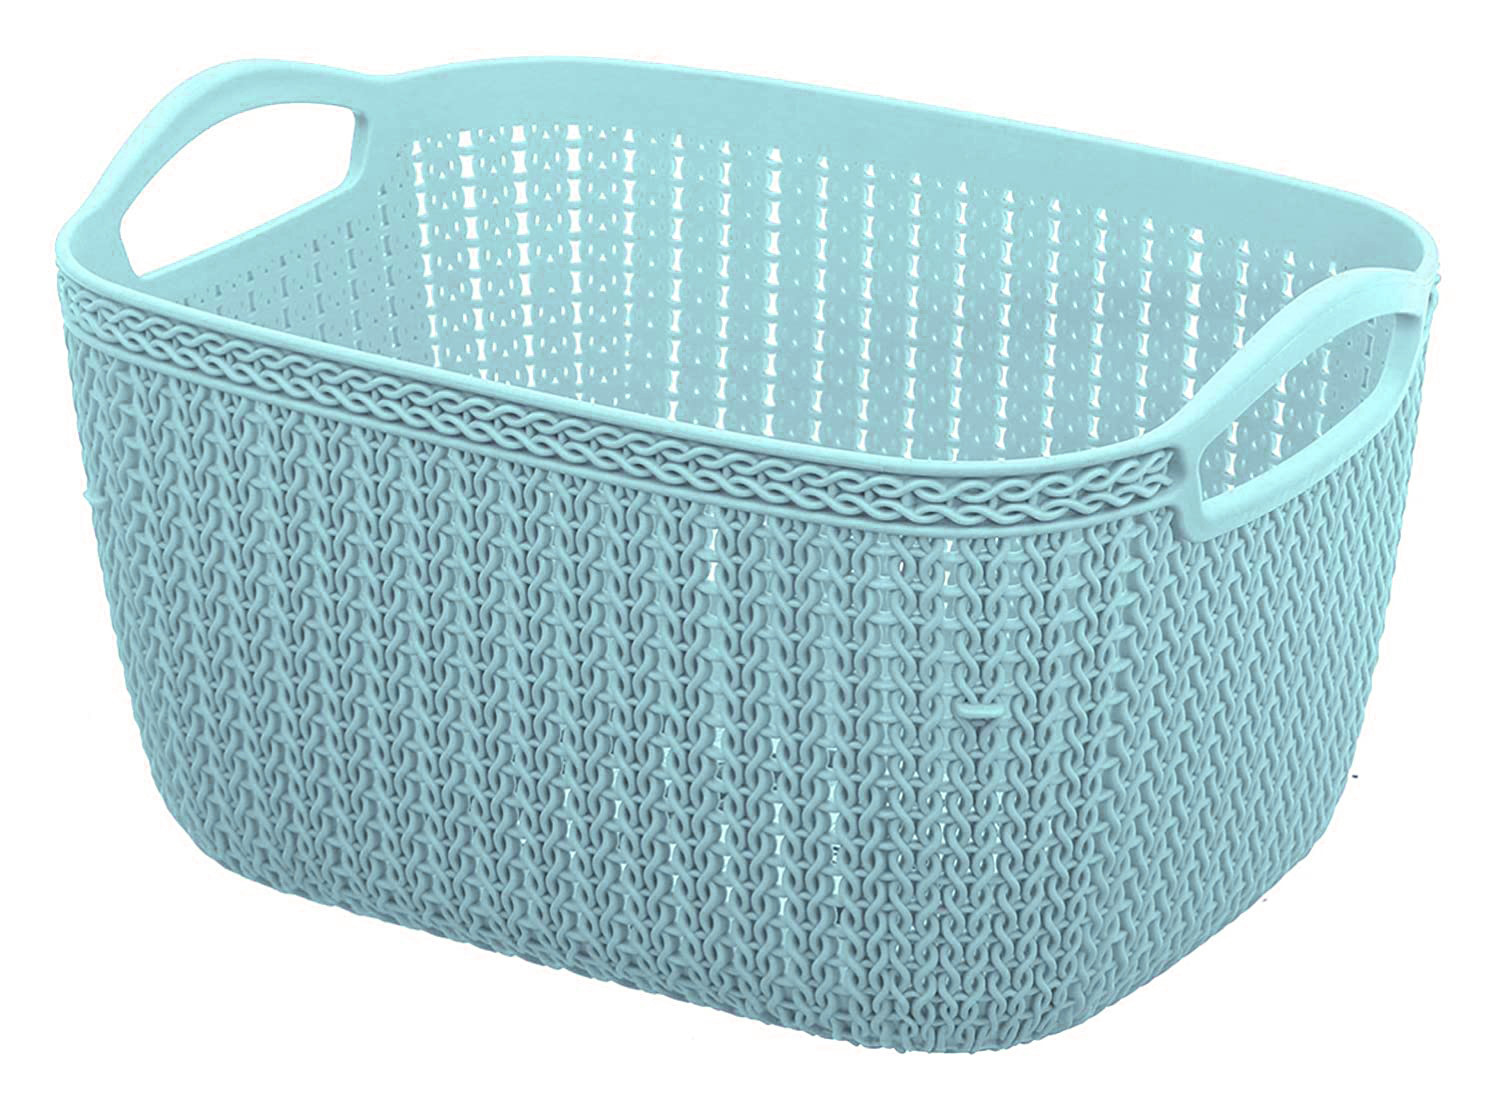 Kuber Industries Q-5,6 Unbreakable Plastic Multipurpose Large & Medium Size Flexible Storage Baskets/Fruit Vegetable Bathroom Stationary Home Basket with Handles (Light Blue)